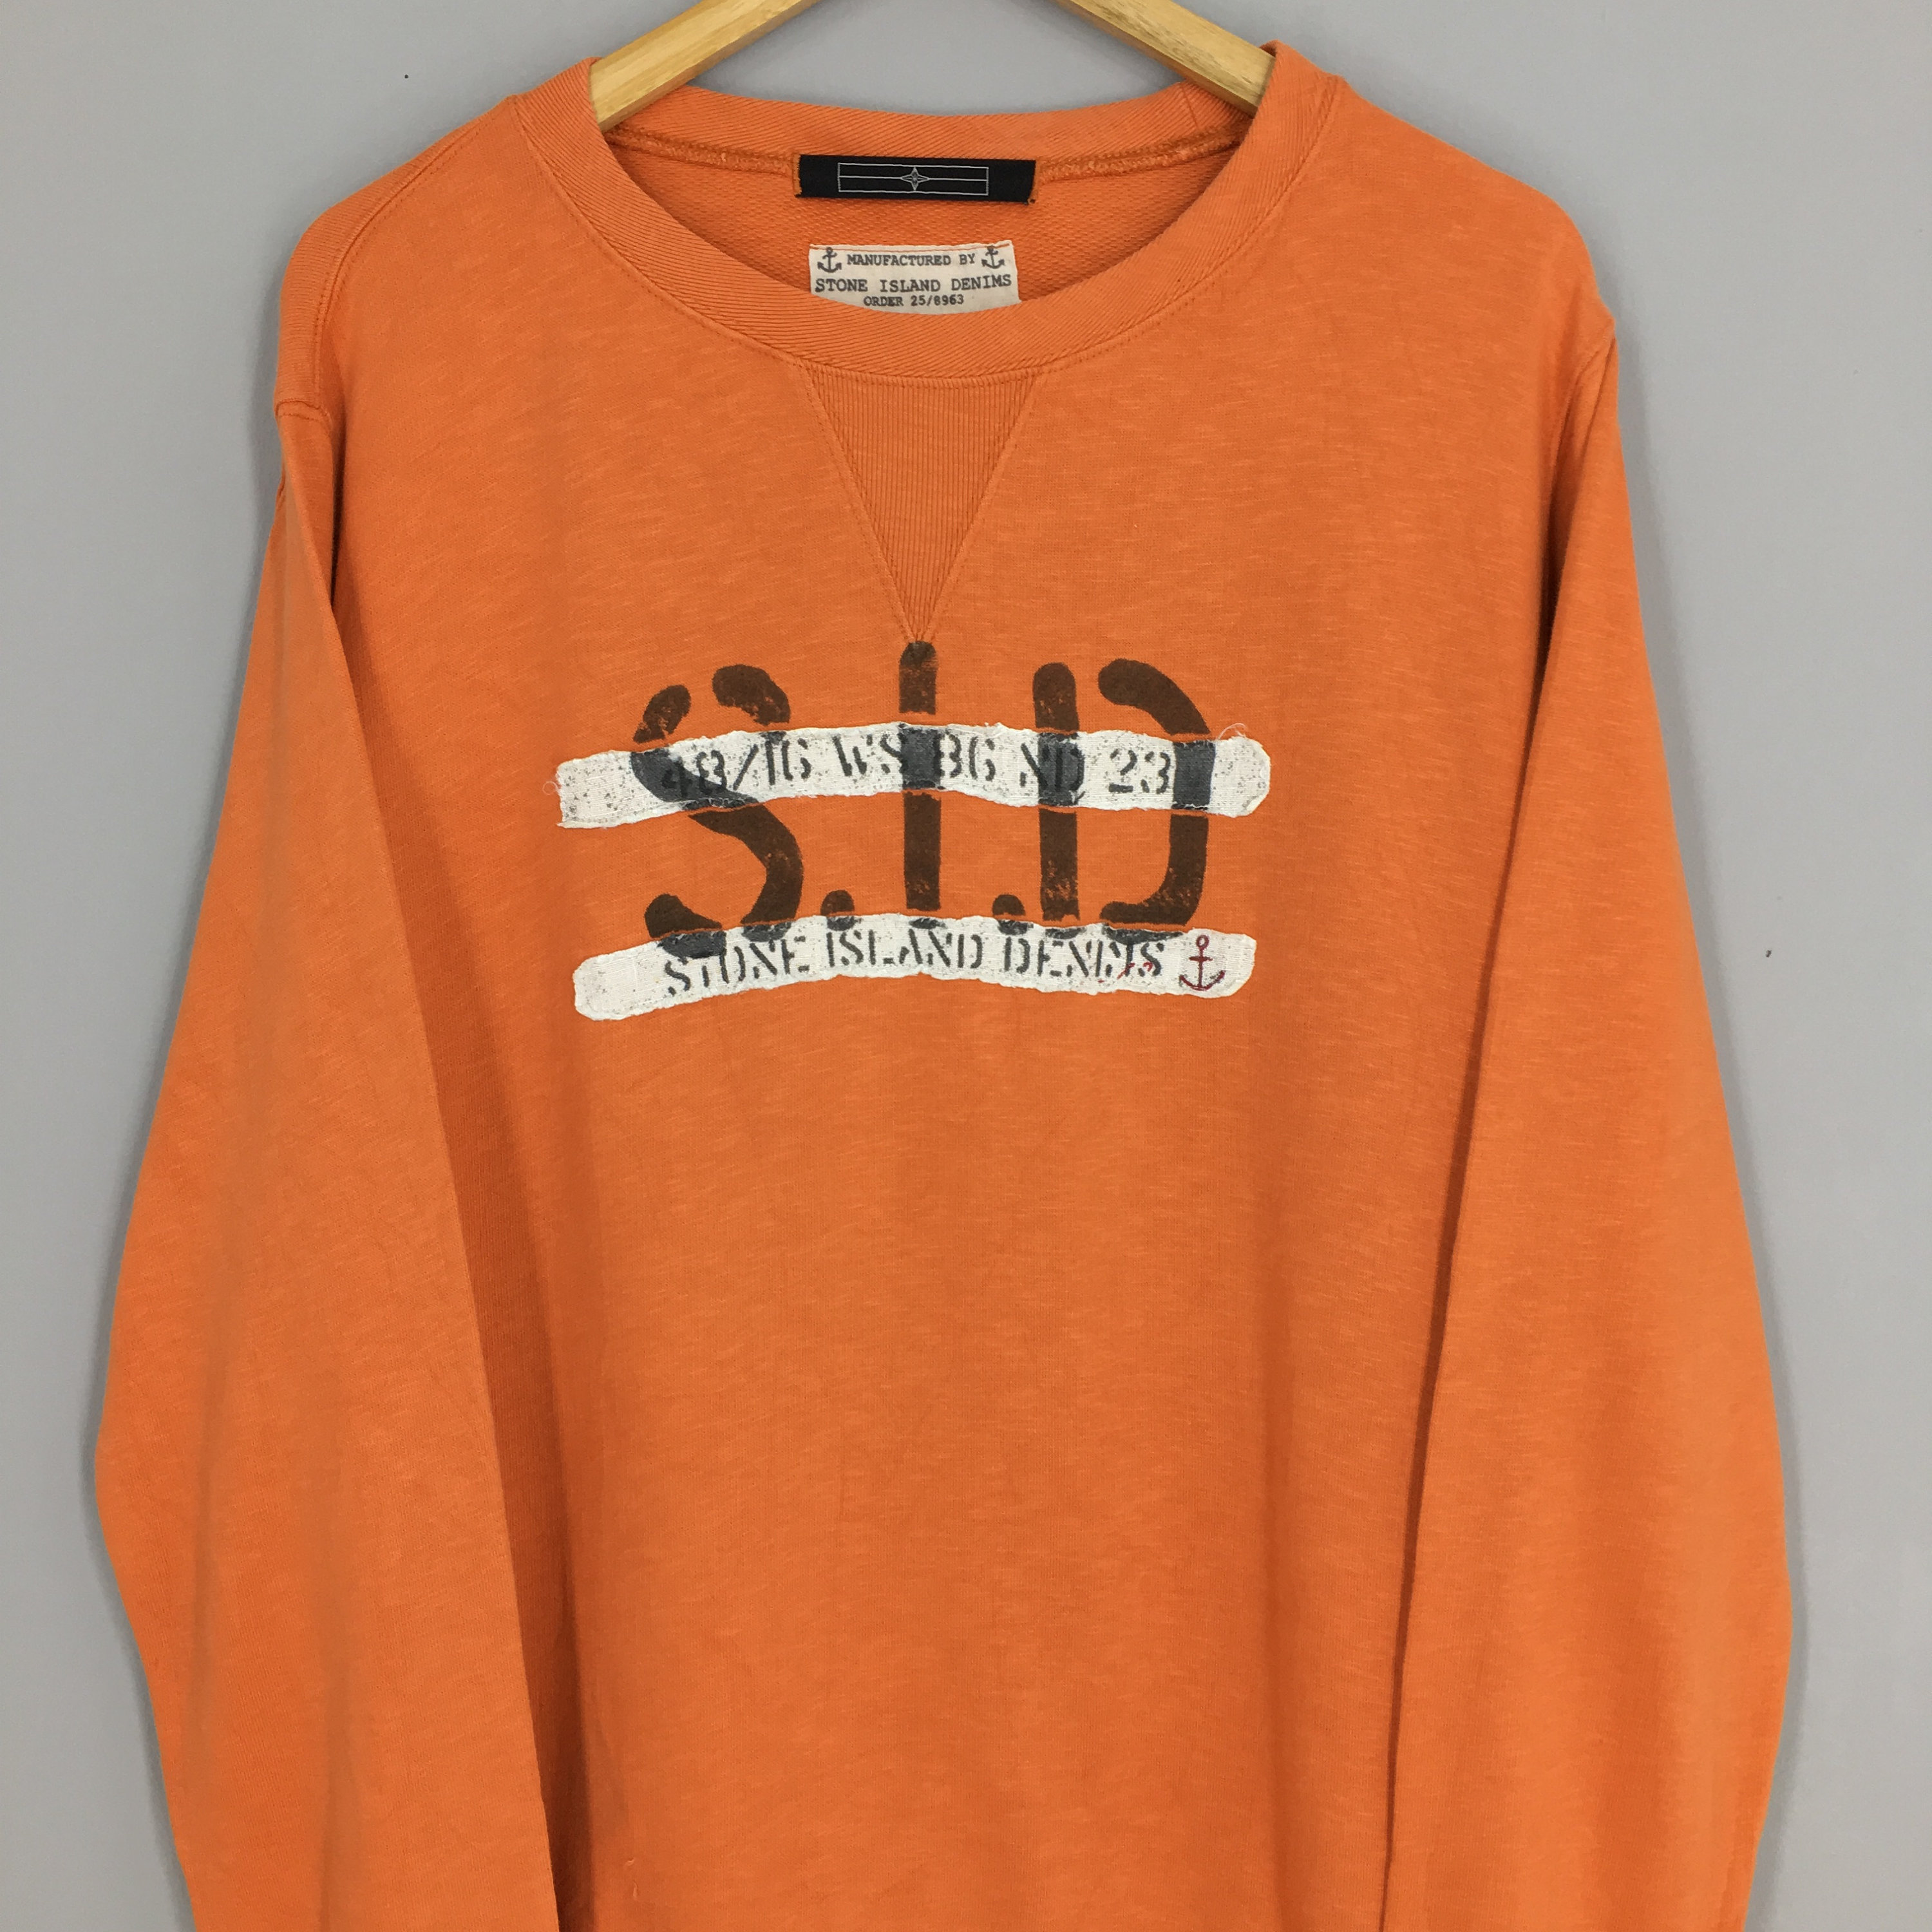 Vintage Stone Island Denim Sweatshirt Xlarge Stone Island SID - Etsy